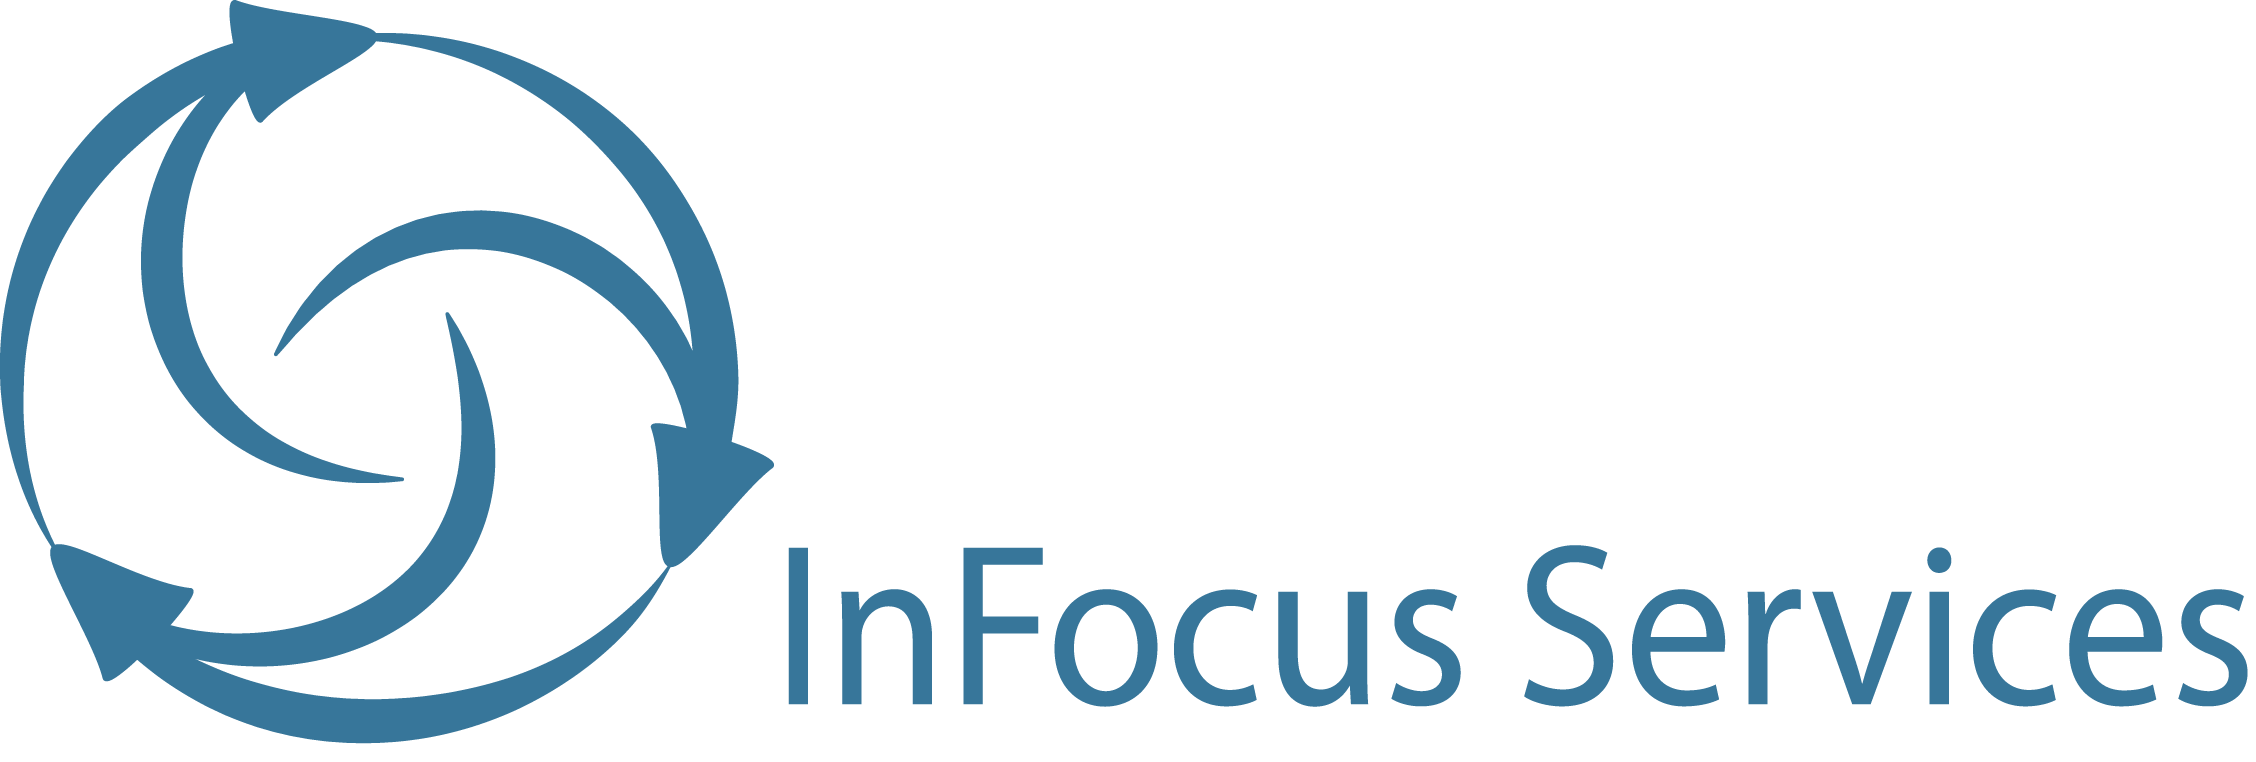 Infocus Logo - Home Page | InFocus Services